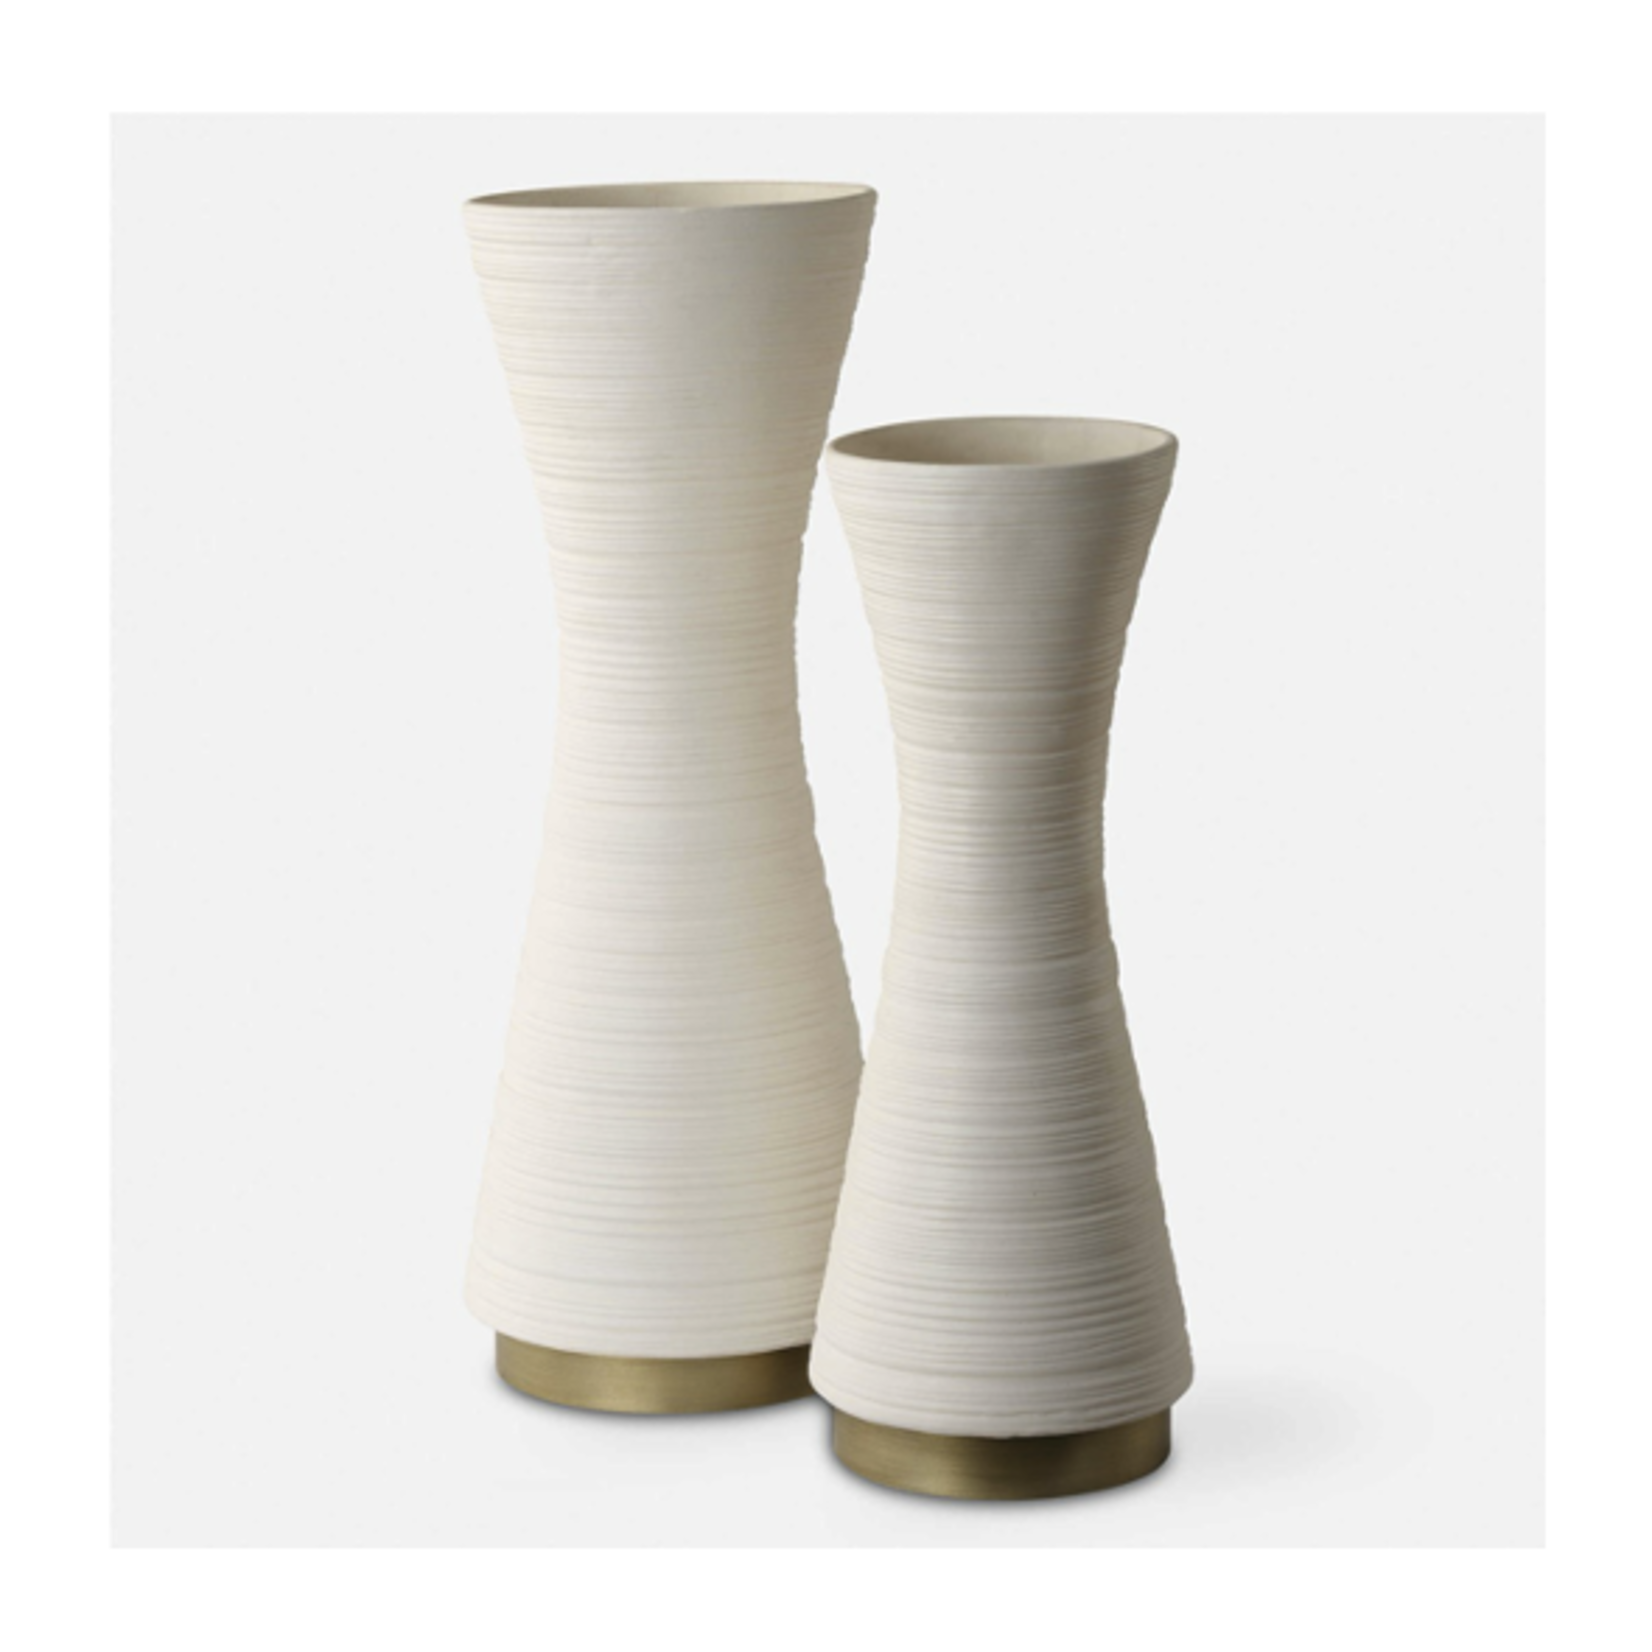 Outside The Box 18" & 15" Set Of 2 Ridgeline White & Antique Gold Ceramic Vases